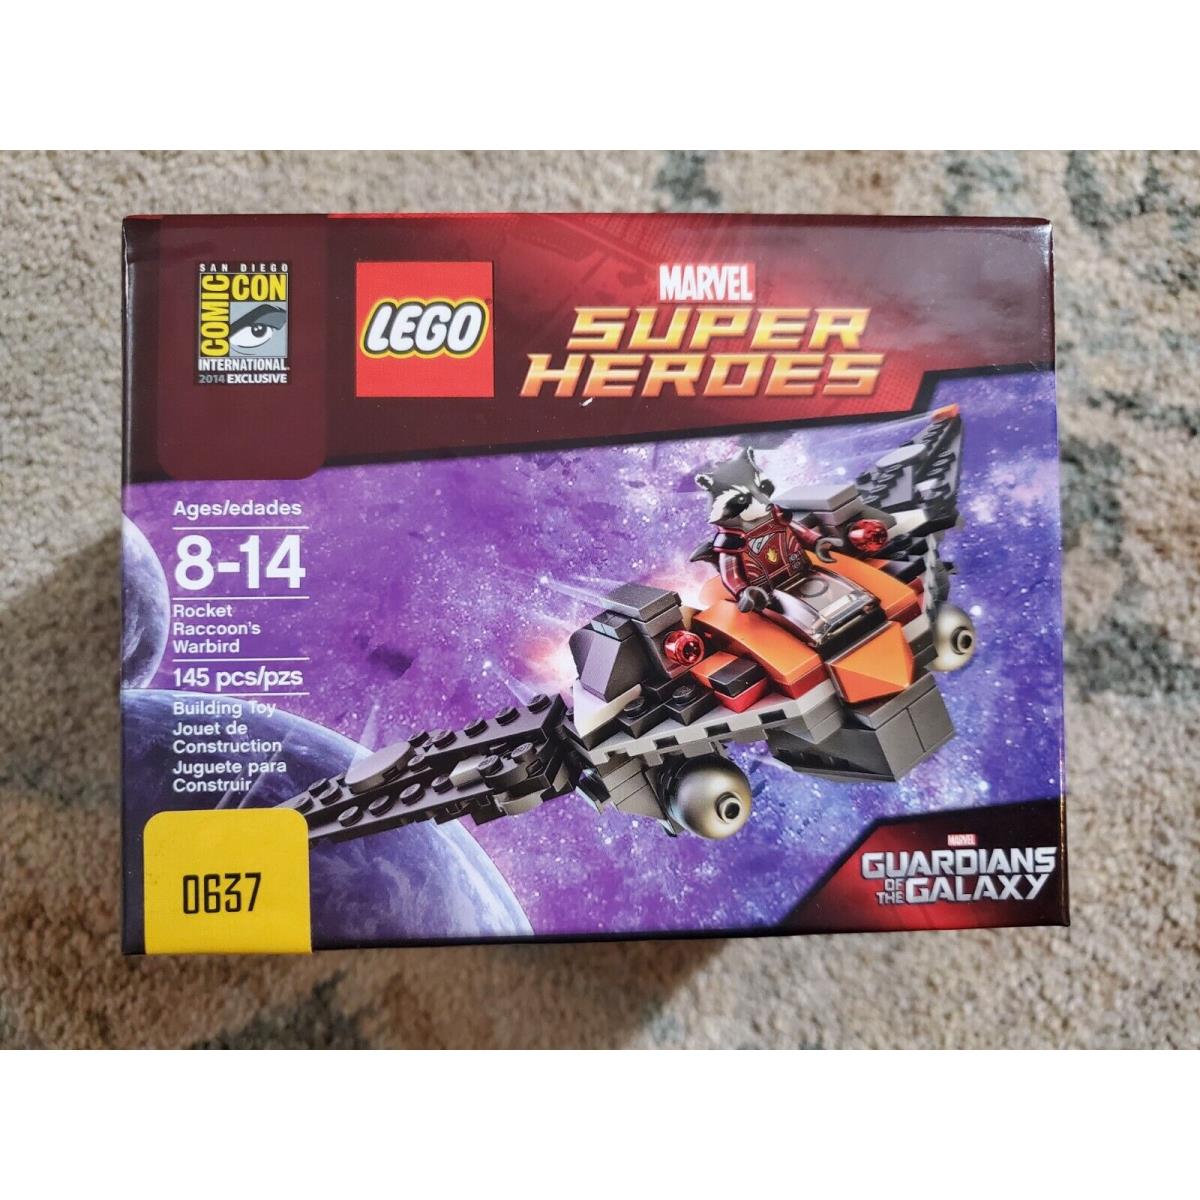 Ligt Wear Lego 2014 Sdcc Marvel Rocket Raccoon`s Warbird 0637